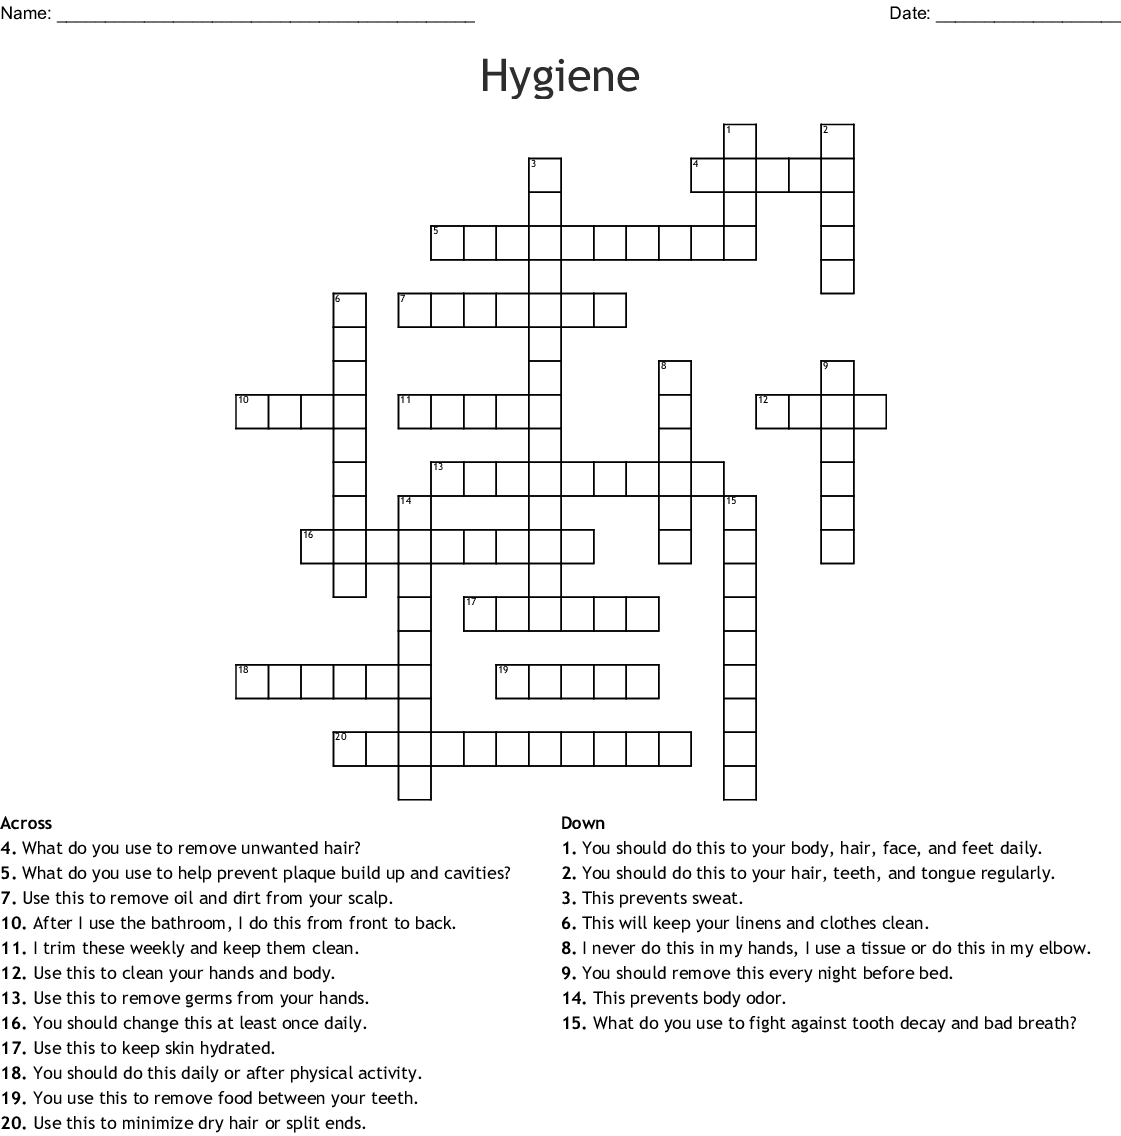 Hygiene Crossword WordMint